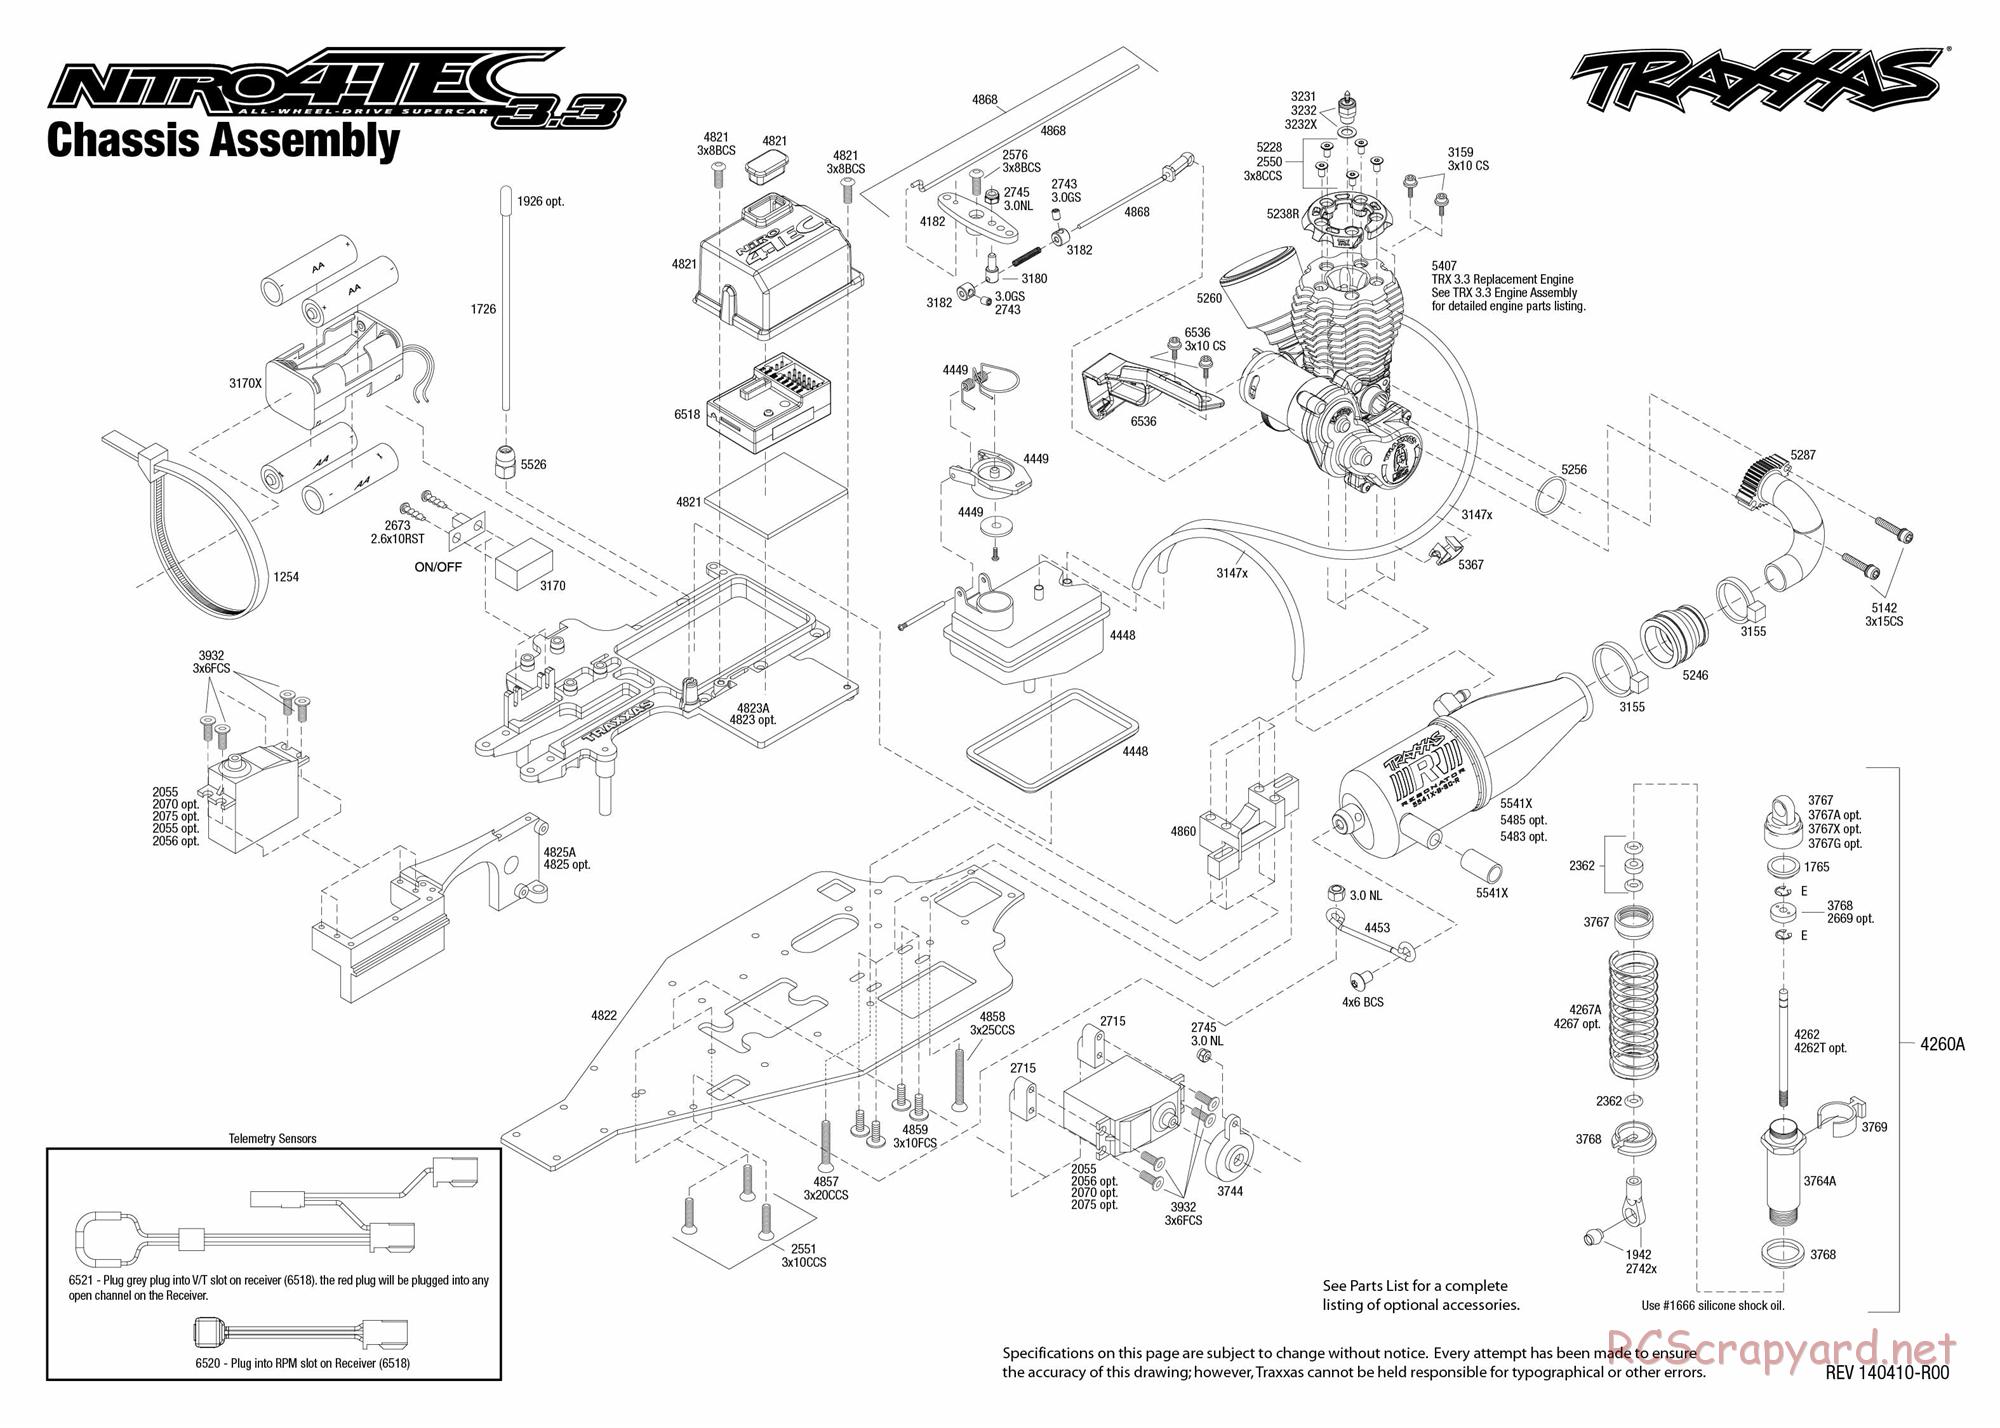 Traxxas - Nitro 4-Tec 3.3 (2014) - Exploded Views - Page 1